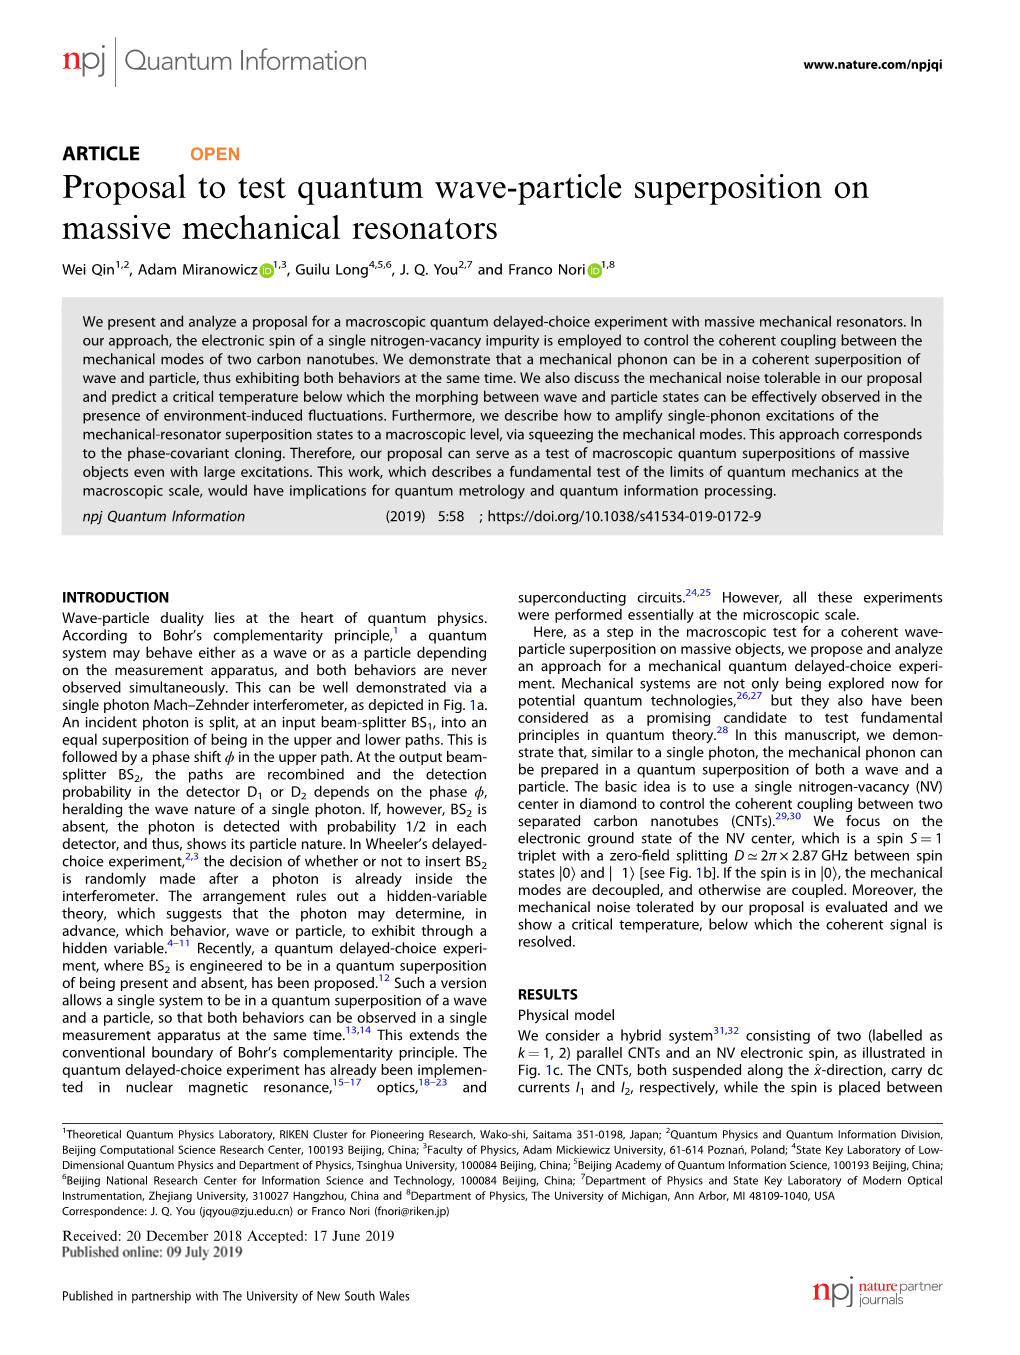 Proposal to Test Quantum Wave-Particle Superposition on Massive Mechanical Resonators